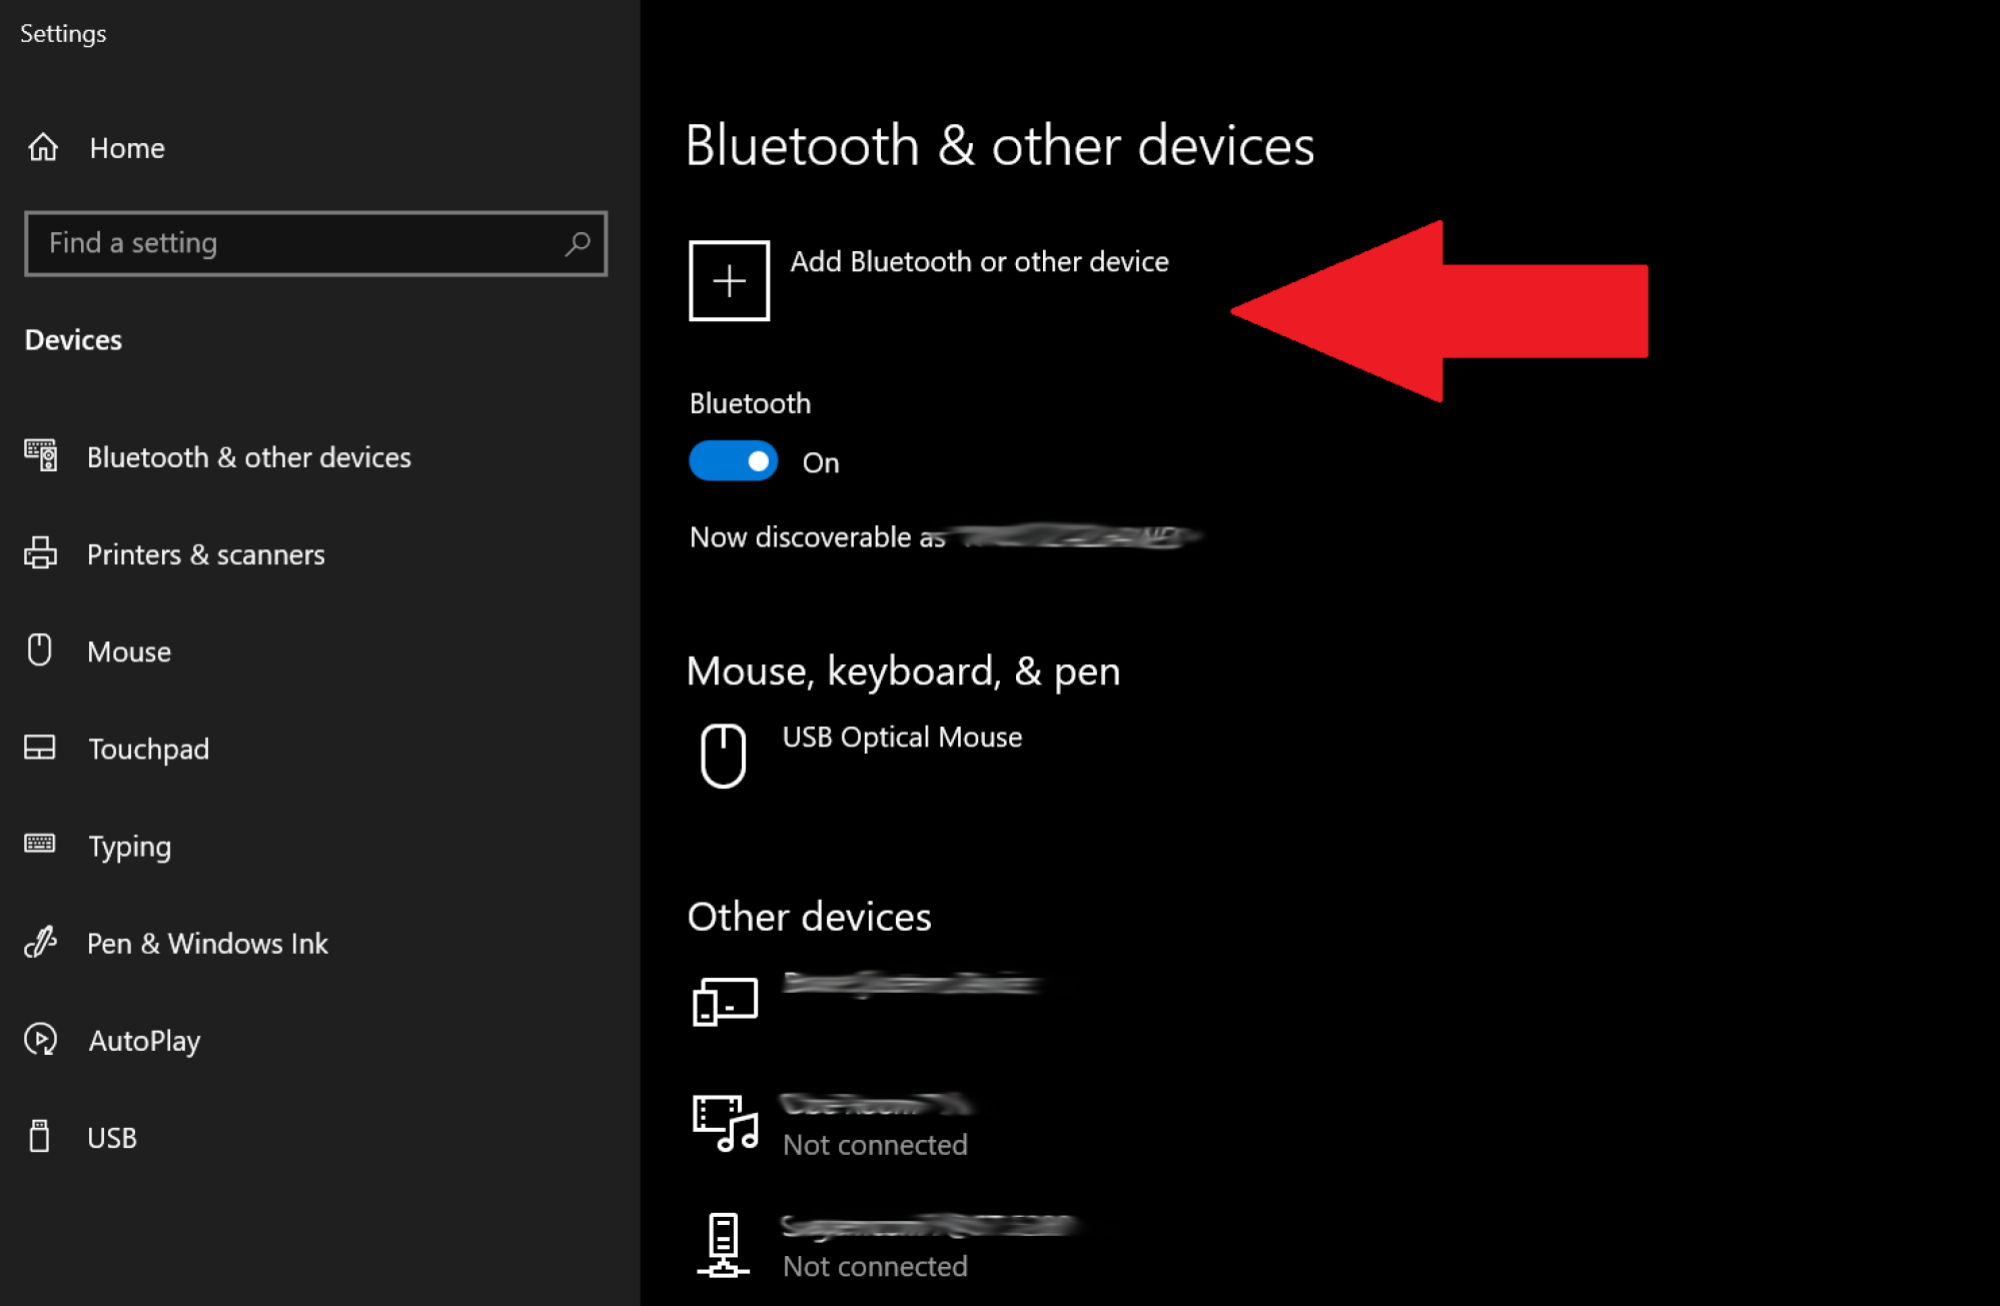 bluetooth settings on a Windows PC